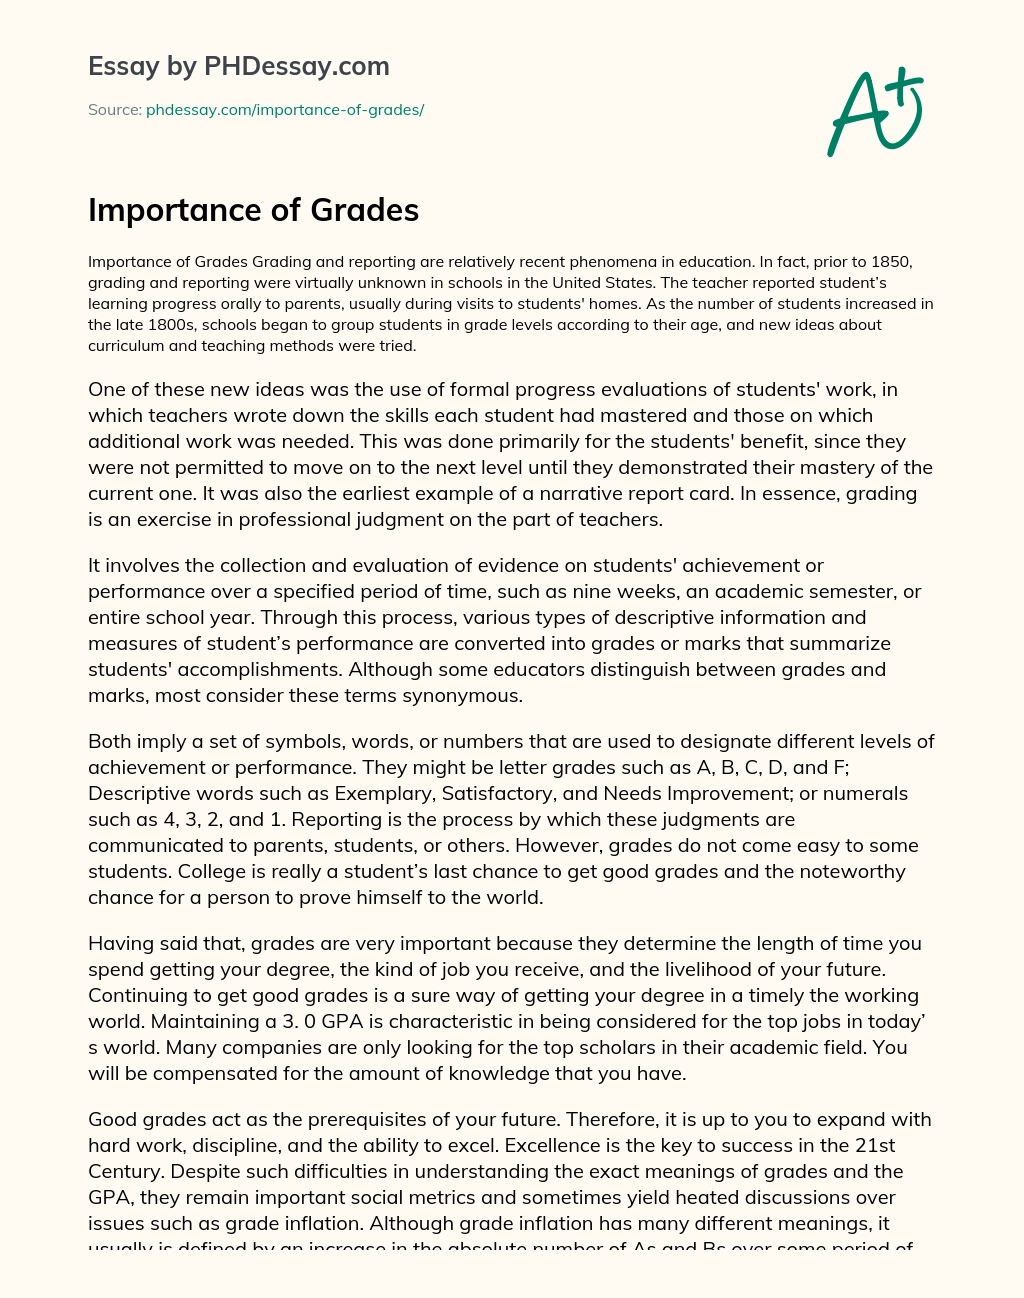 Importance of Grades essay